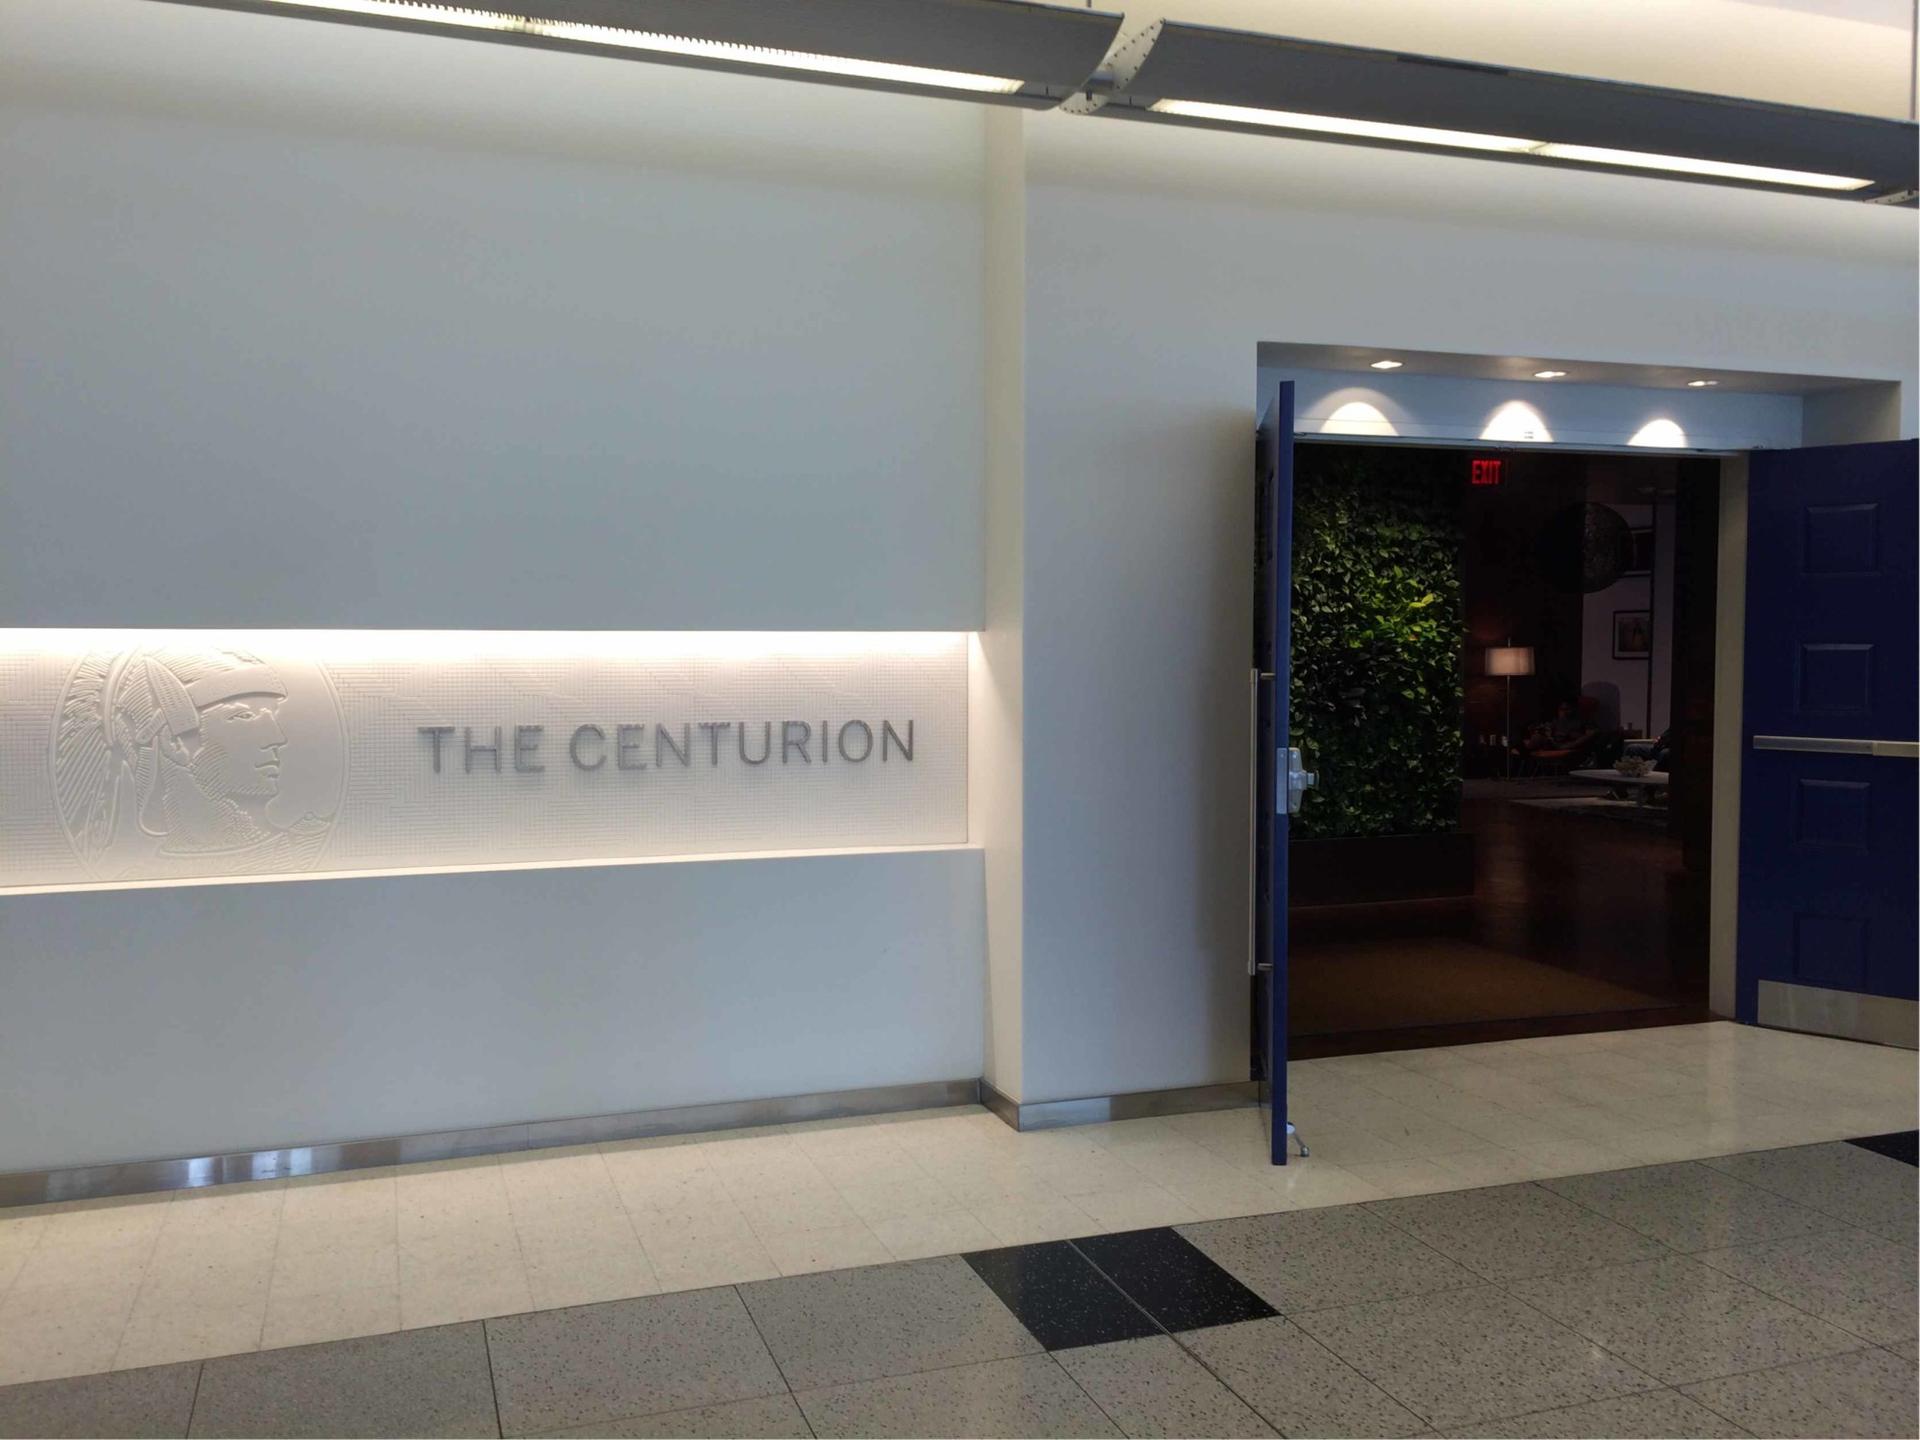 The Centurion Lounge image 64 of 100